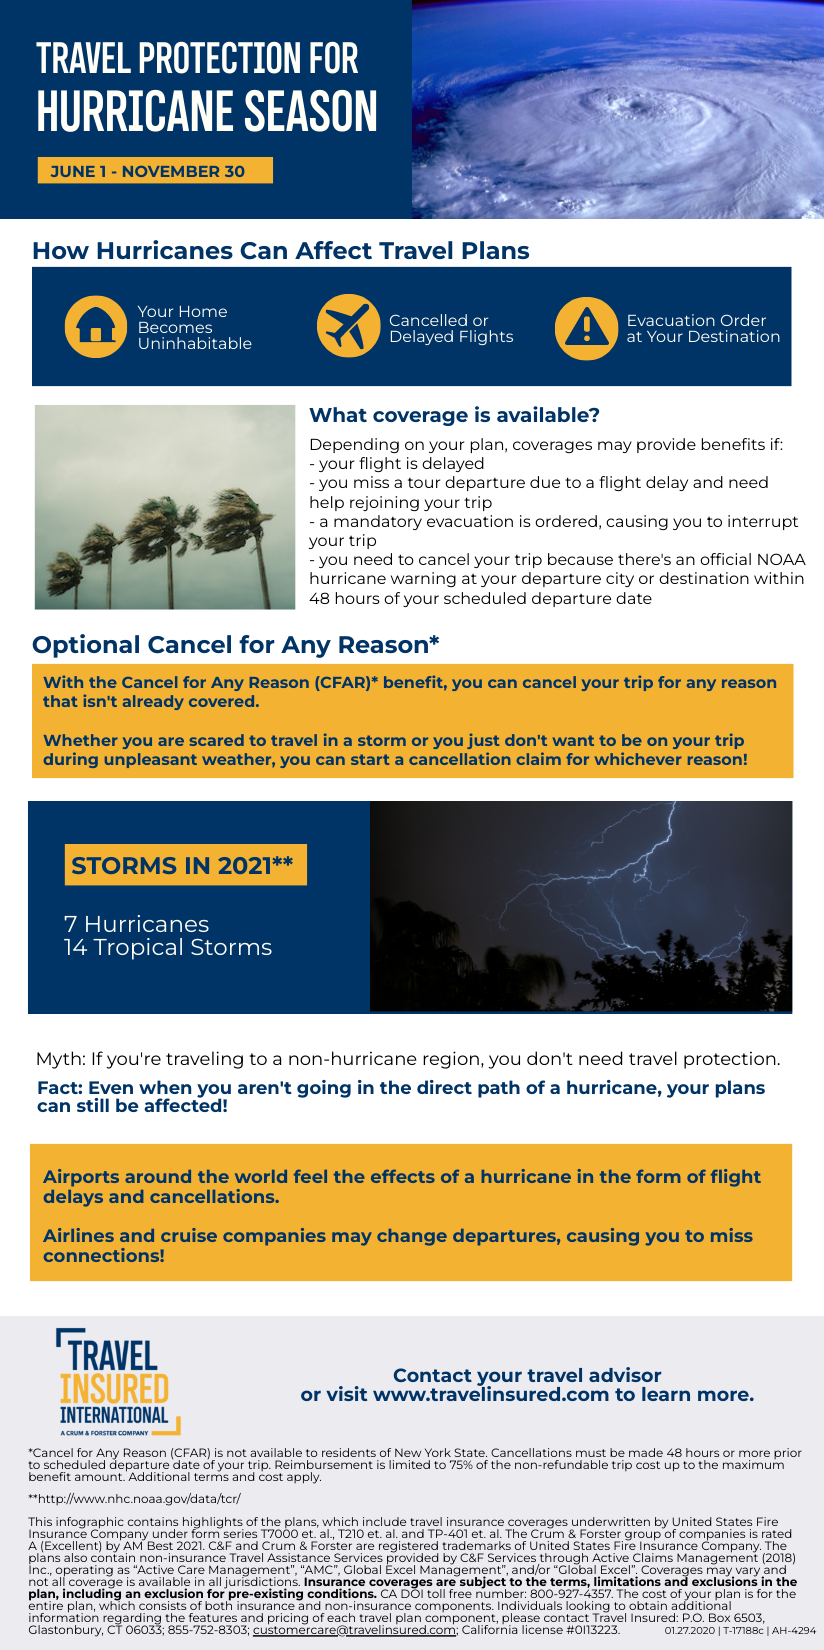 Travel protection for hurricane season infographic